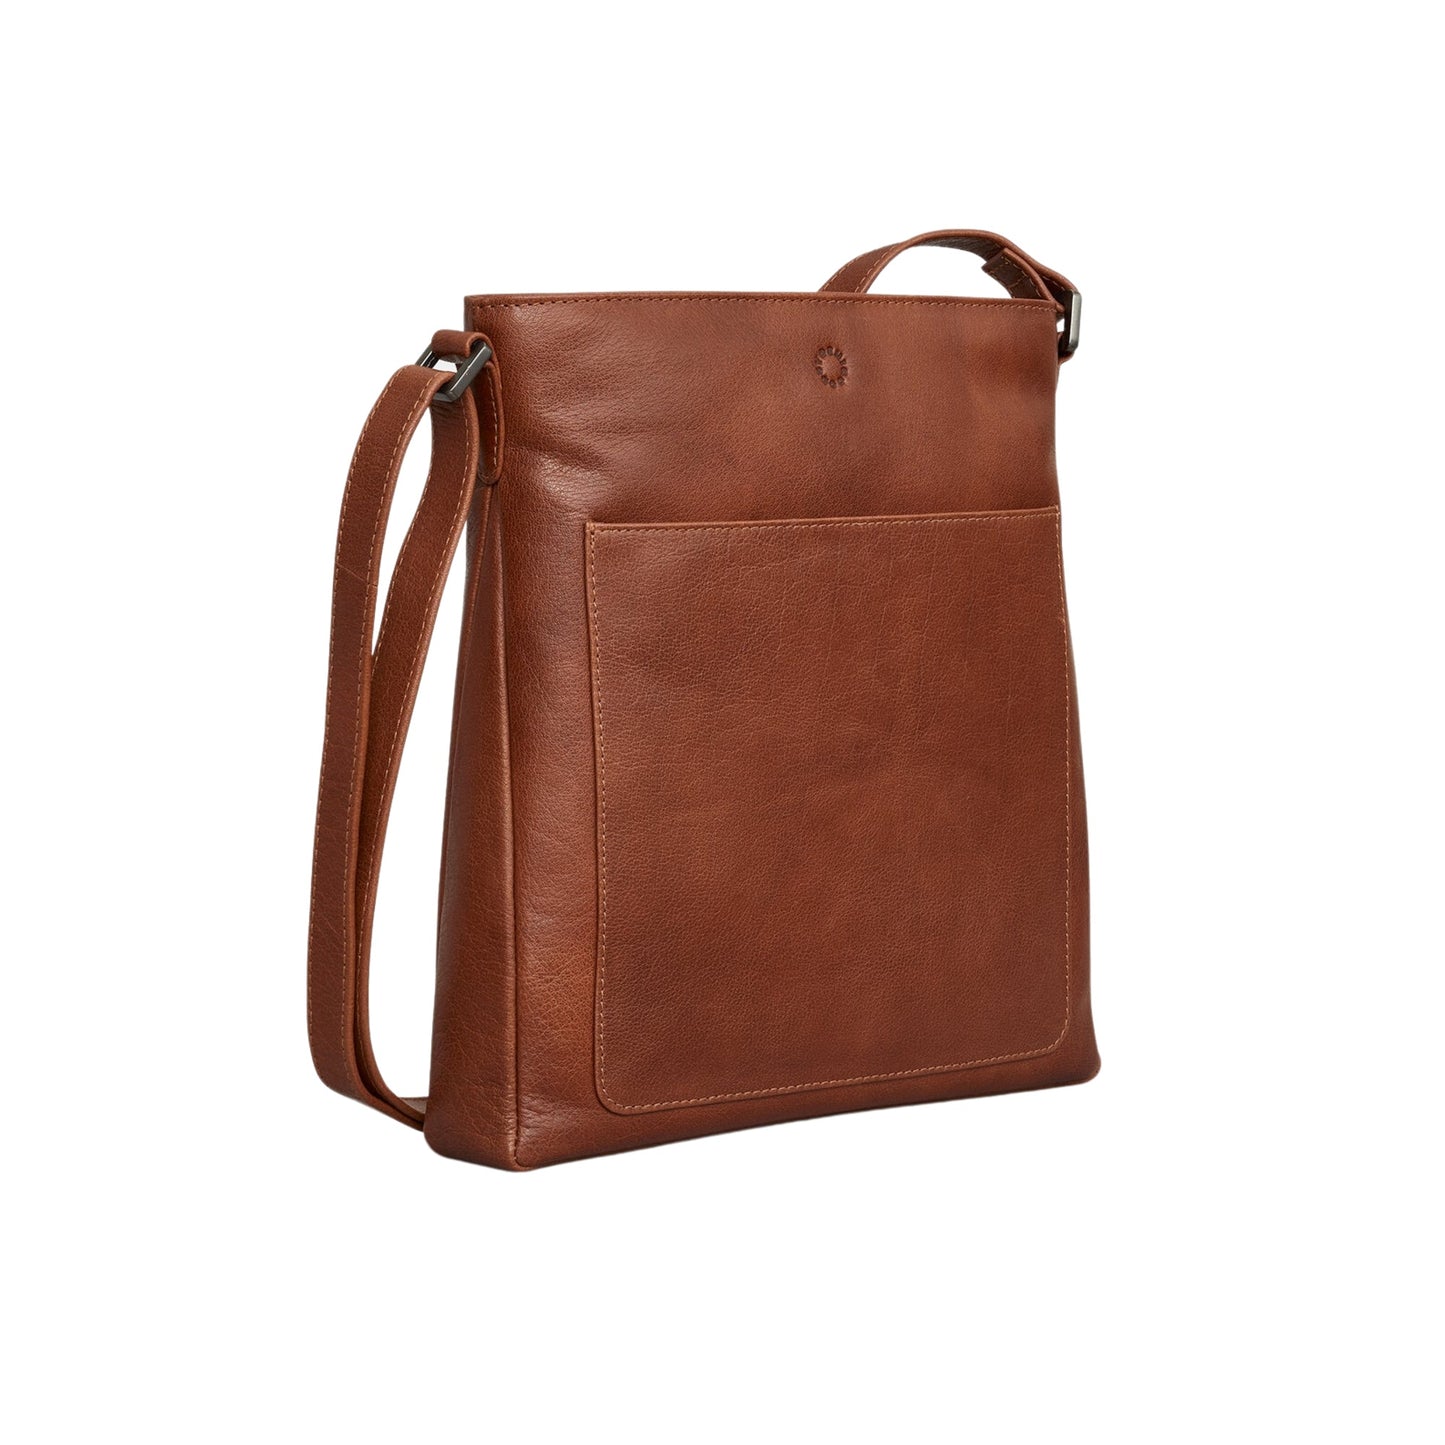 Bryant Leather Crossbody Bag - Brown